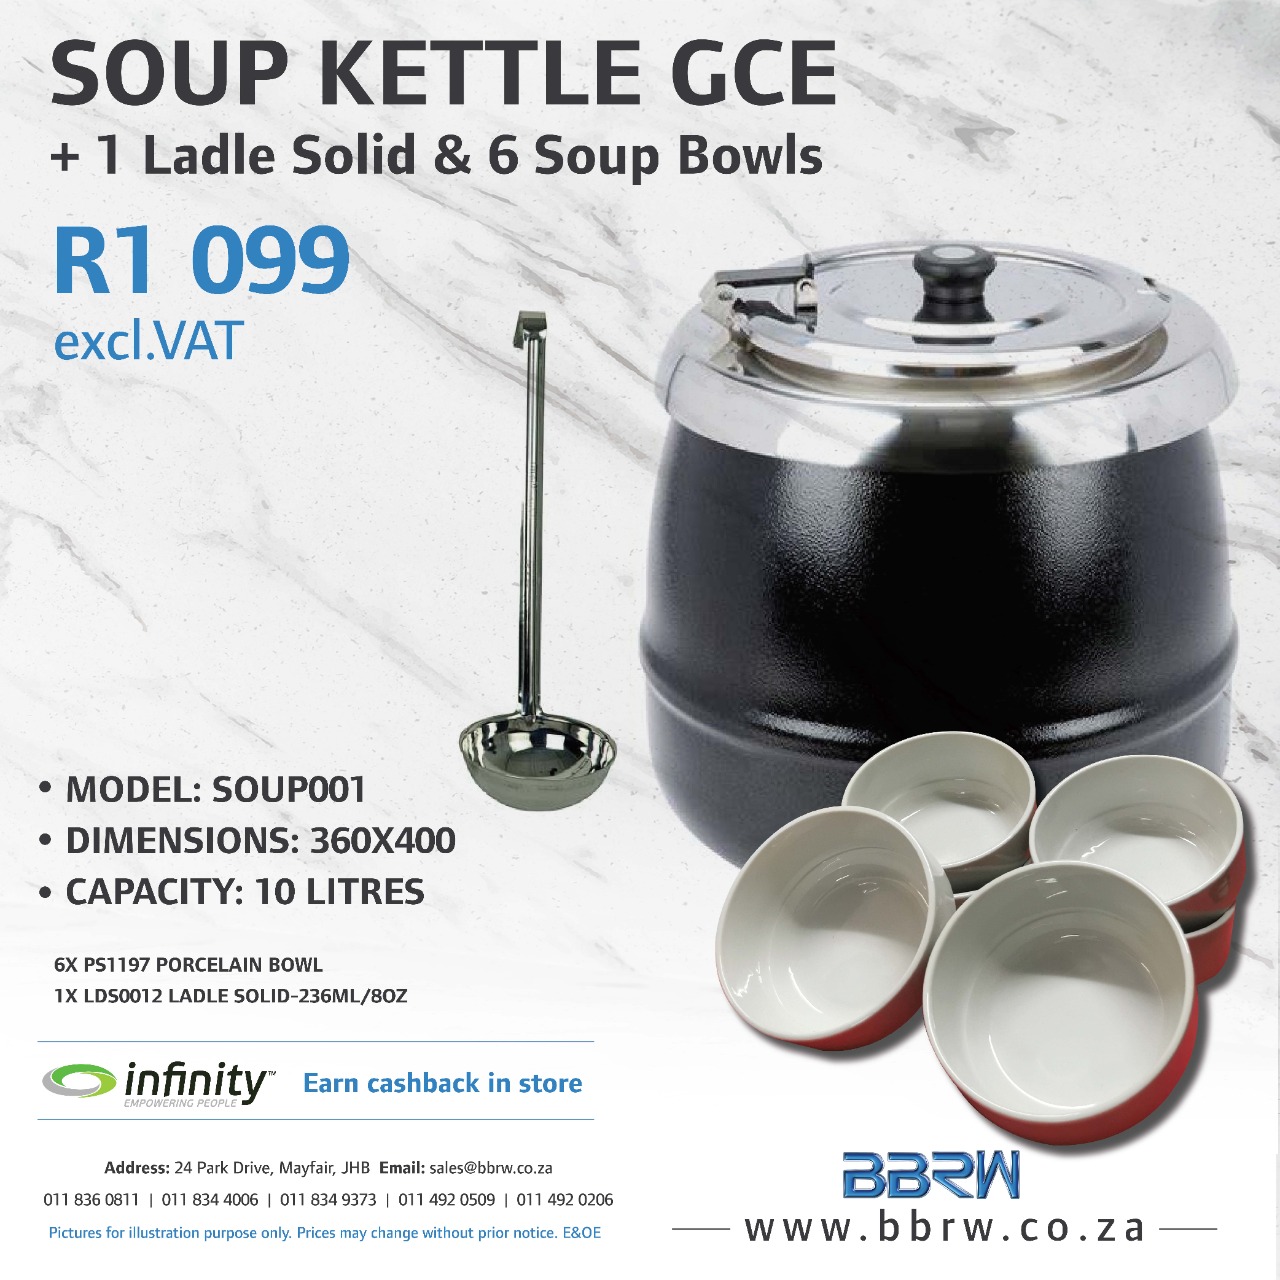 BBRW SPECIAL - Soup Kettle GCE